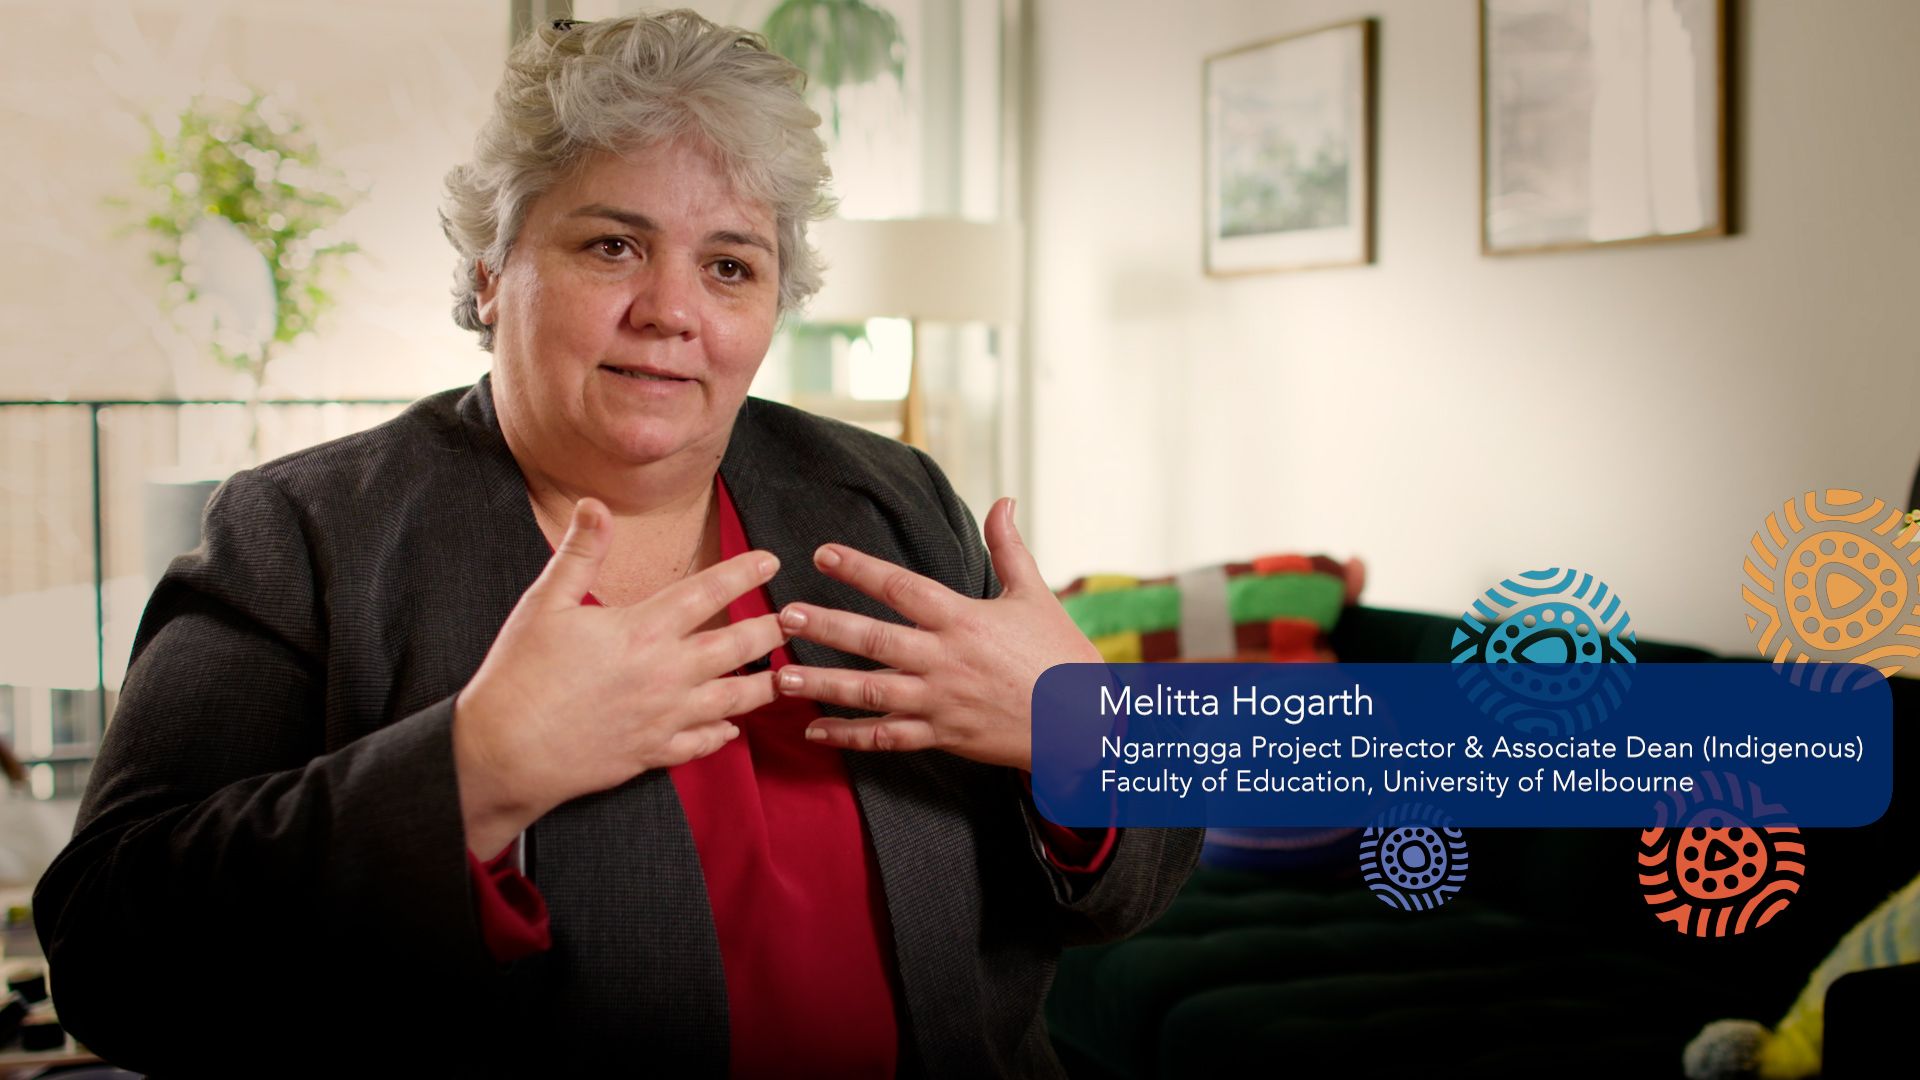 Professor Melitta Hogarth